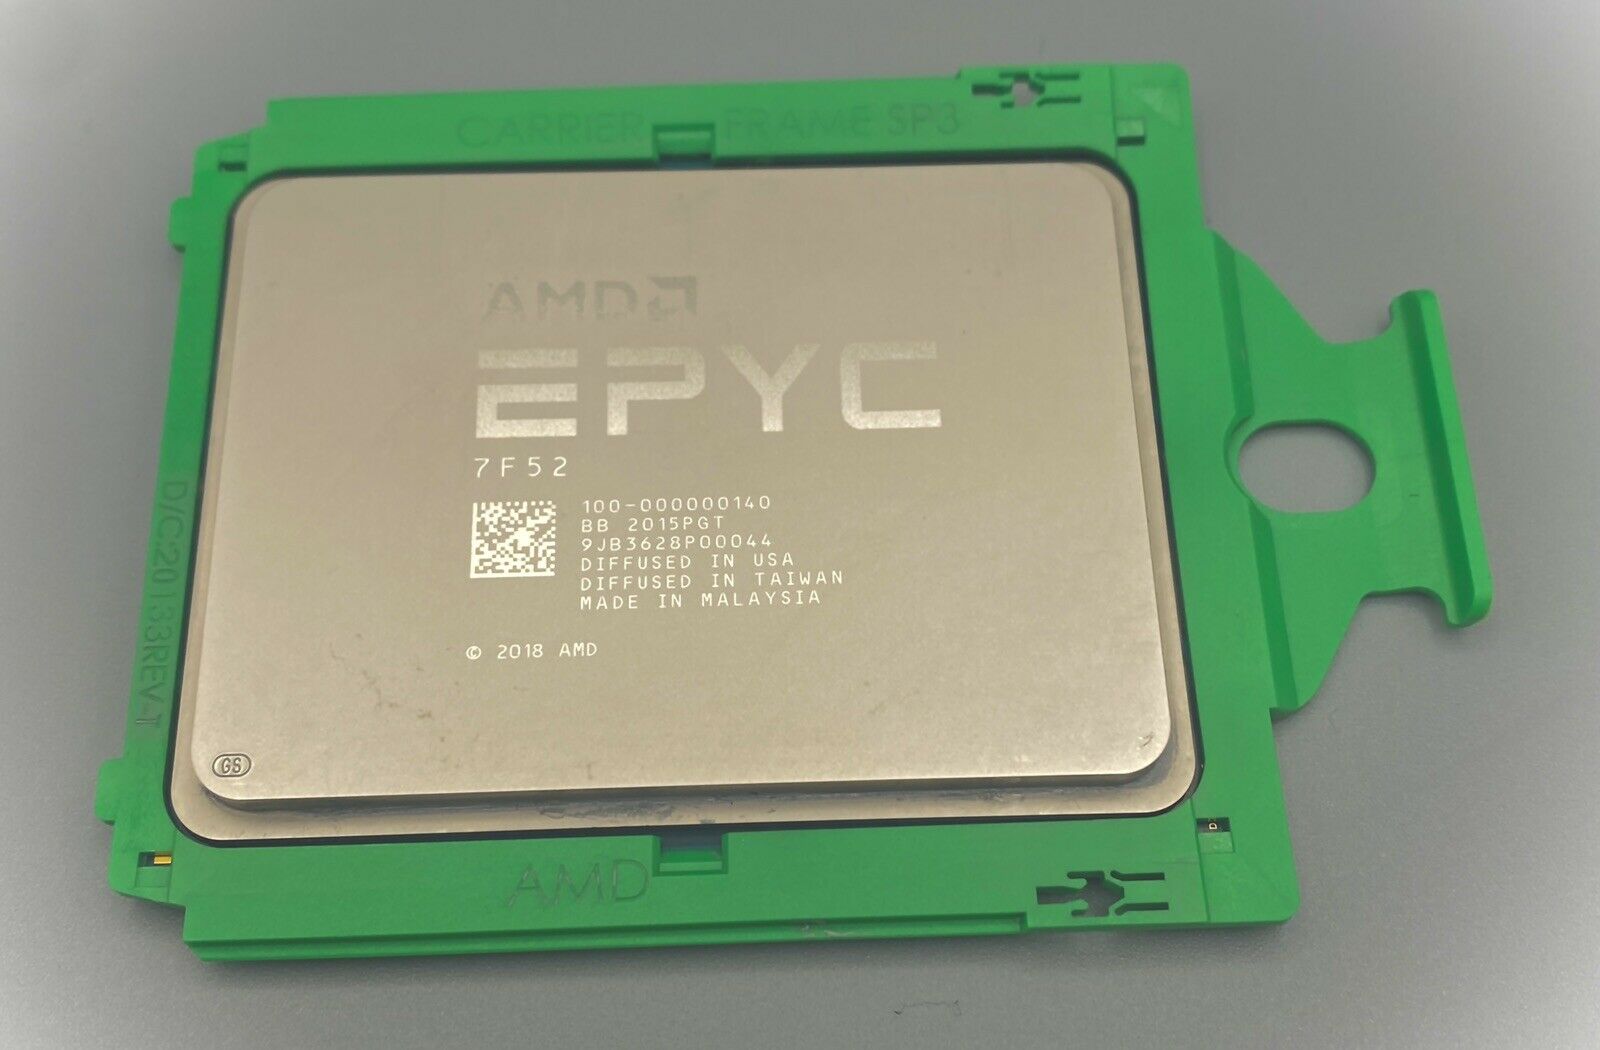 Amd Epyc 7f52 16-core 3.5ghz Socket Sp3 240w Server Processor Cpu 100-000000140